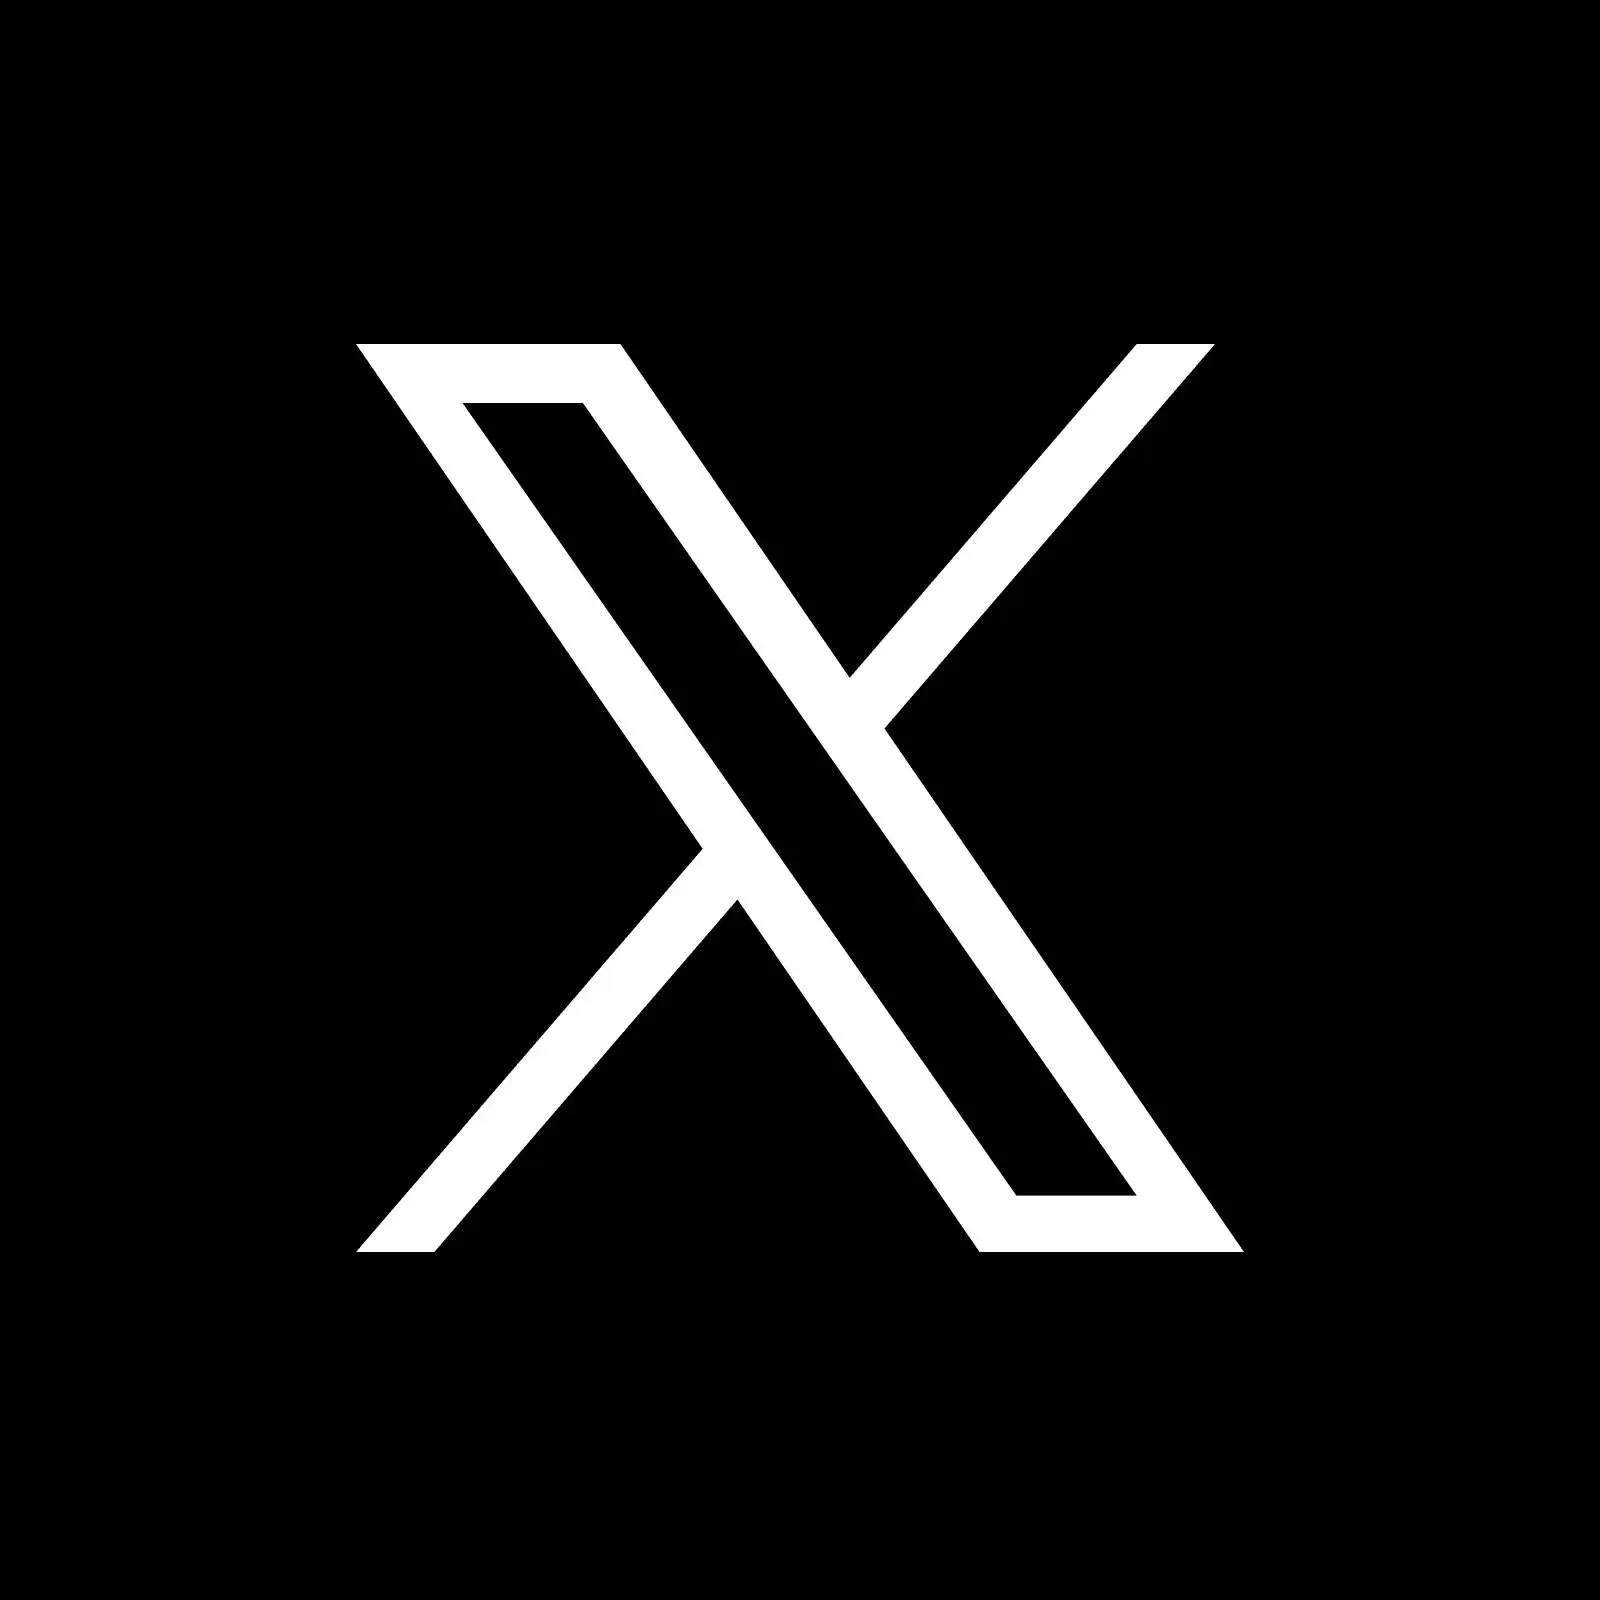 Follow us on X (Twitter)